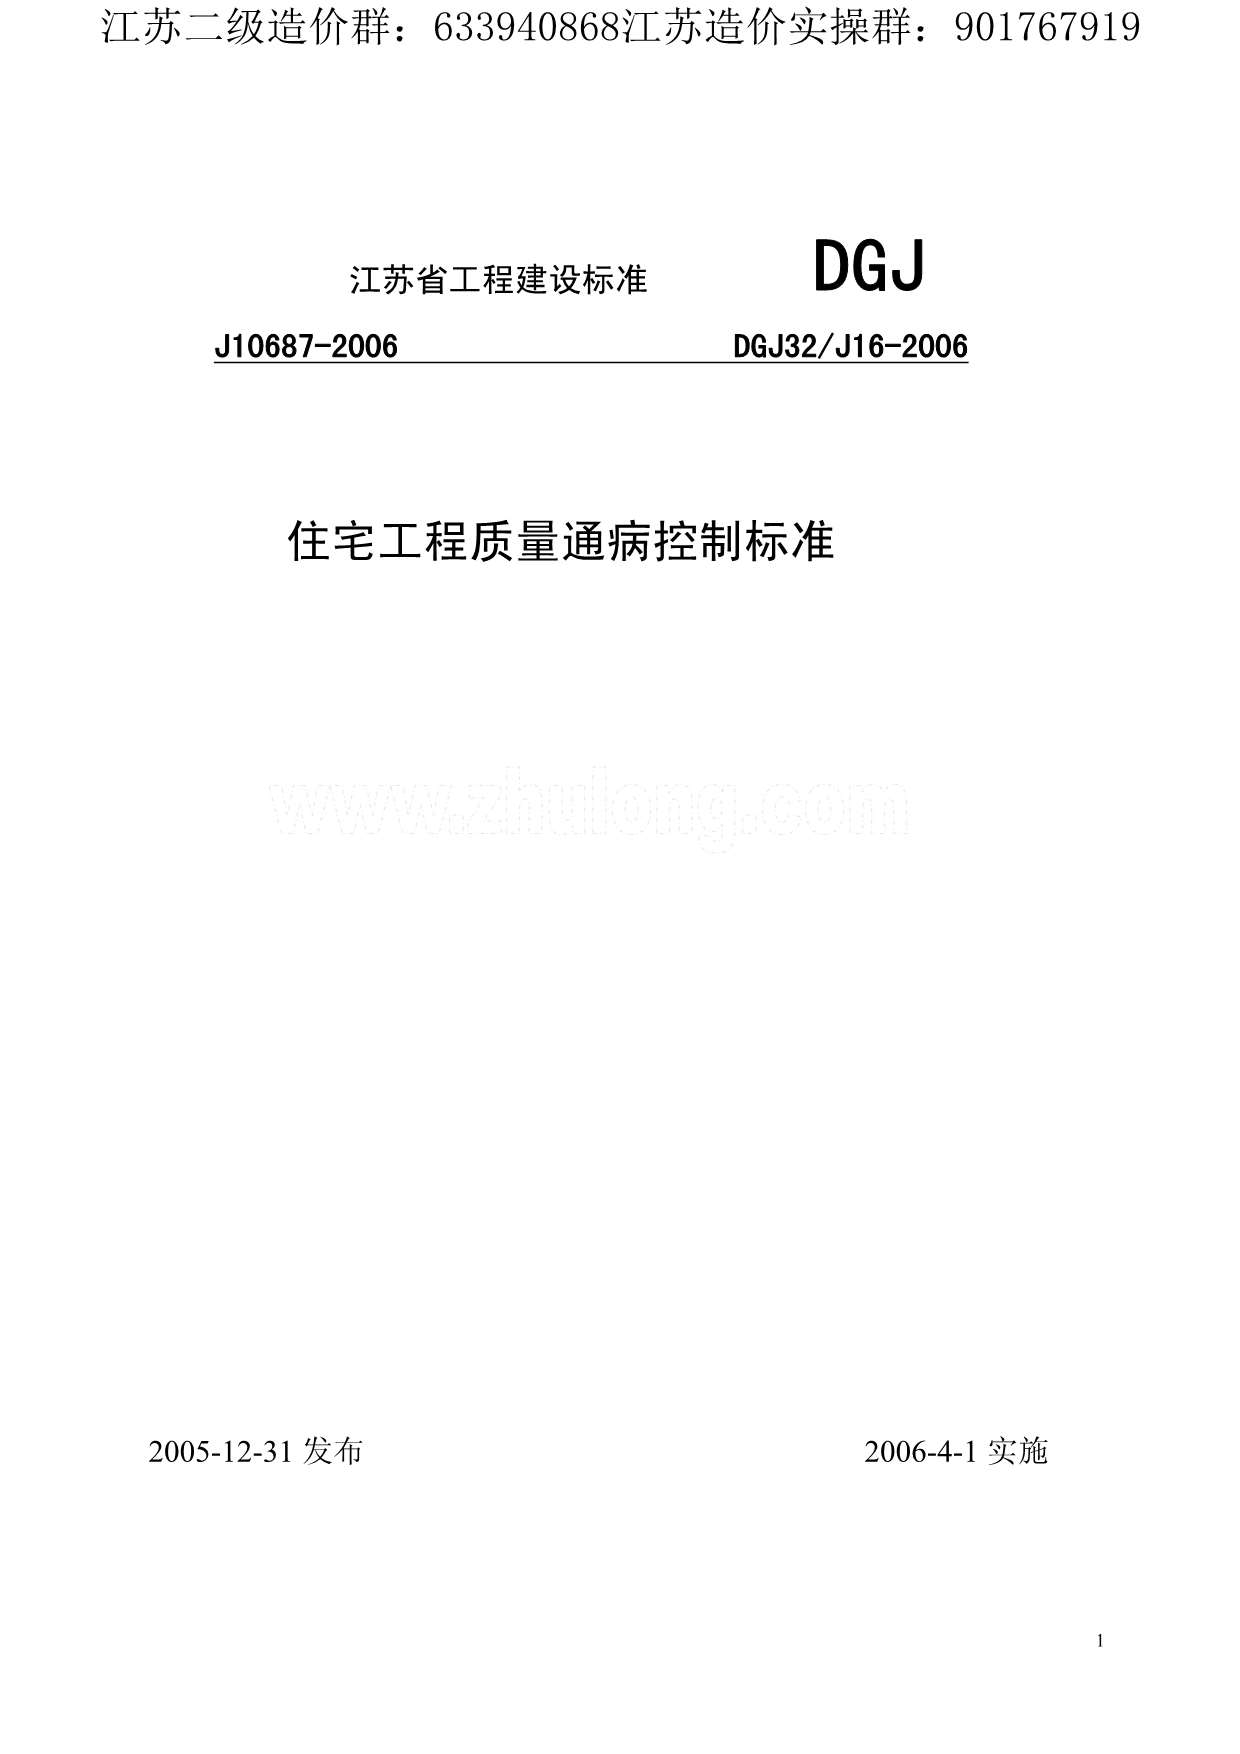 DGJ_32J16-2006_江苏省住宅工程质量通病控制标准